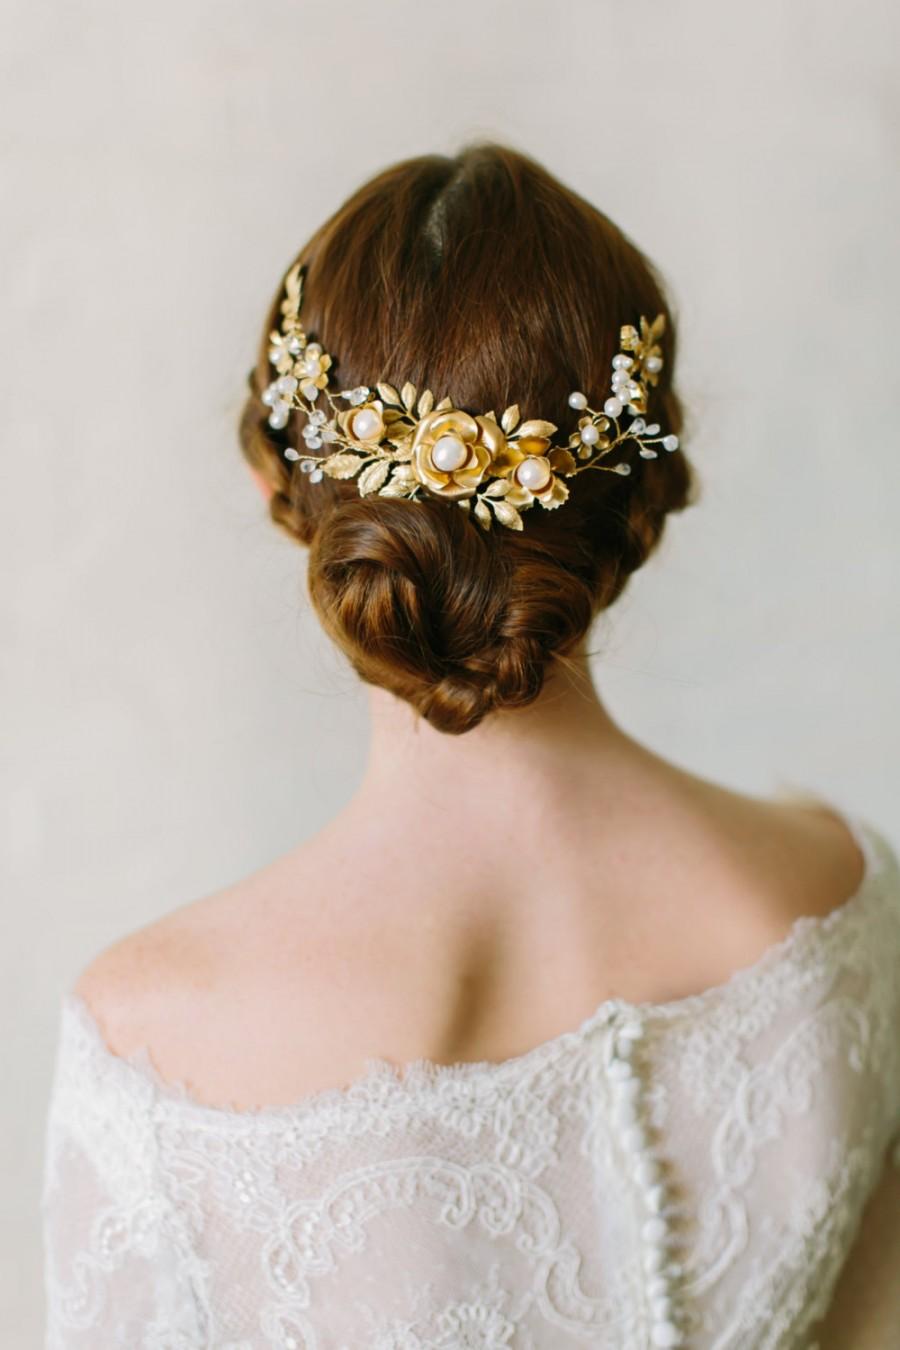 Hochzeit - OCTAVIA romantic floral bridal headpiece, bohemian wedding comb, boho gold hair accessory with pearls, moonstone, crystals